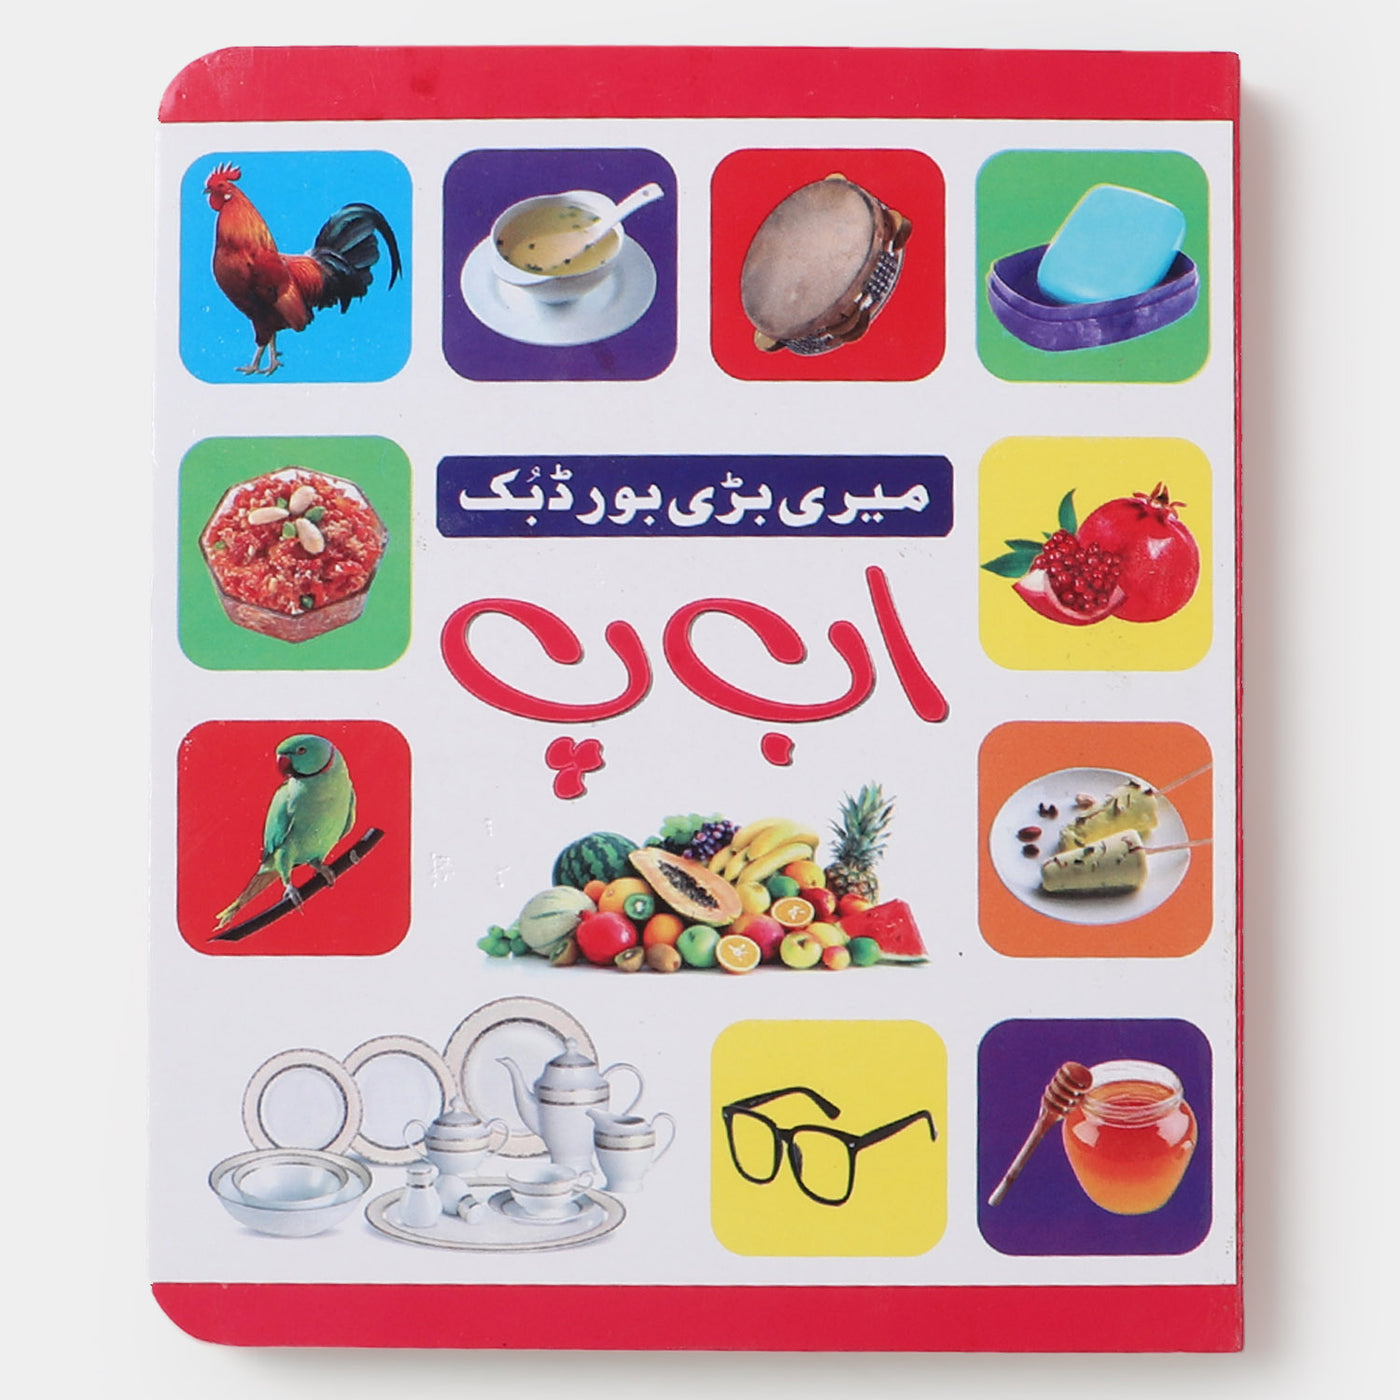 My Big Urdu Educational Board Book